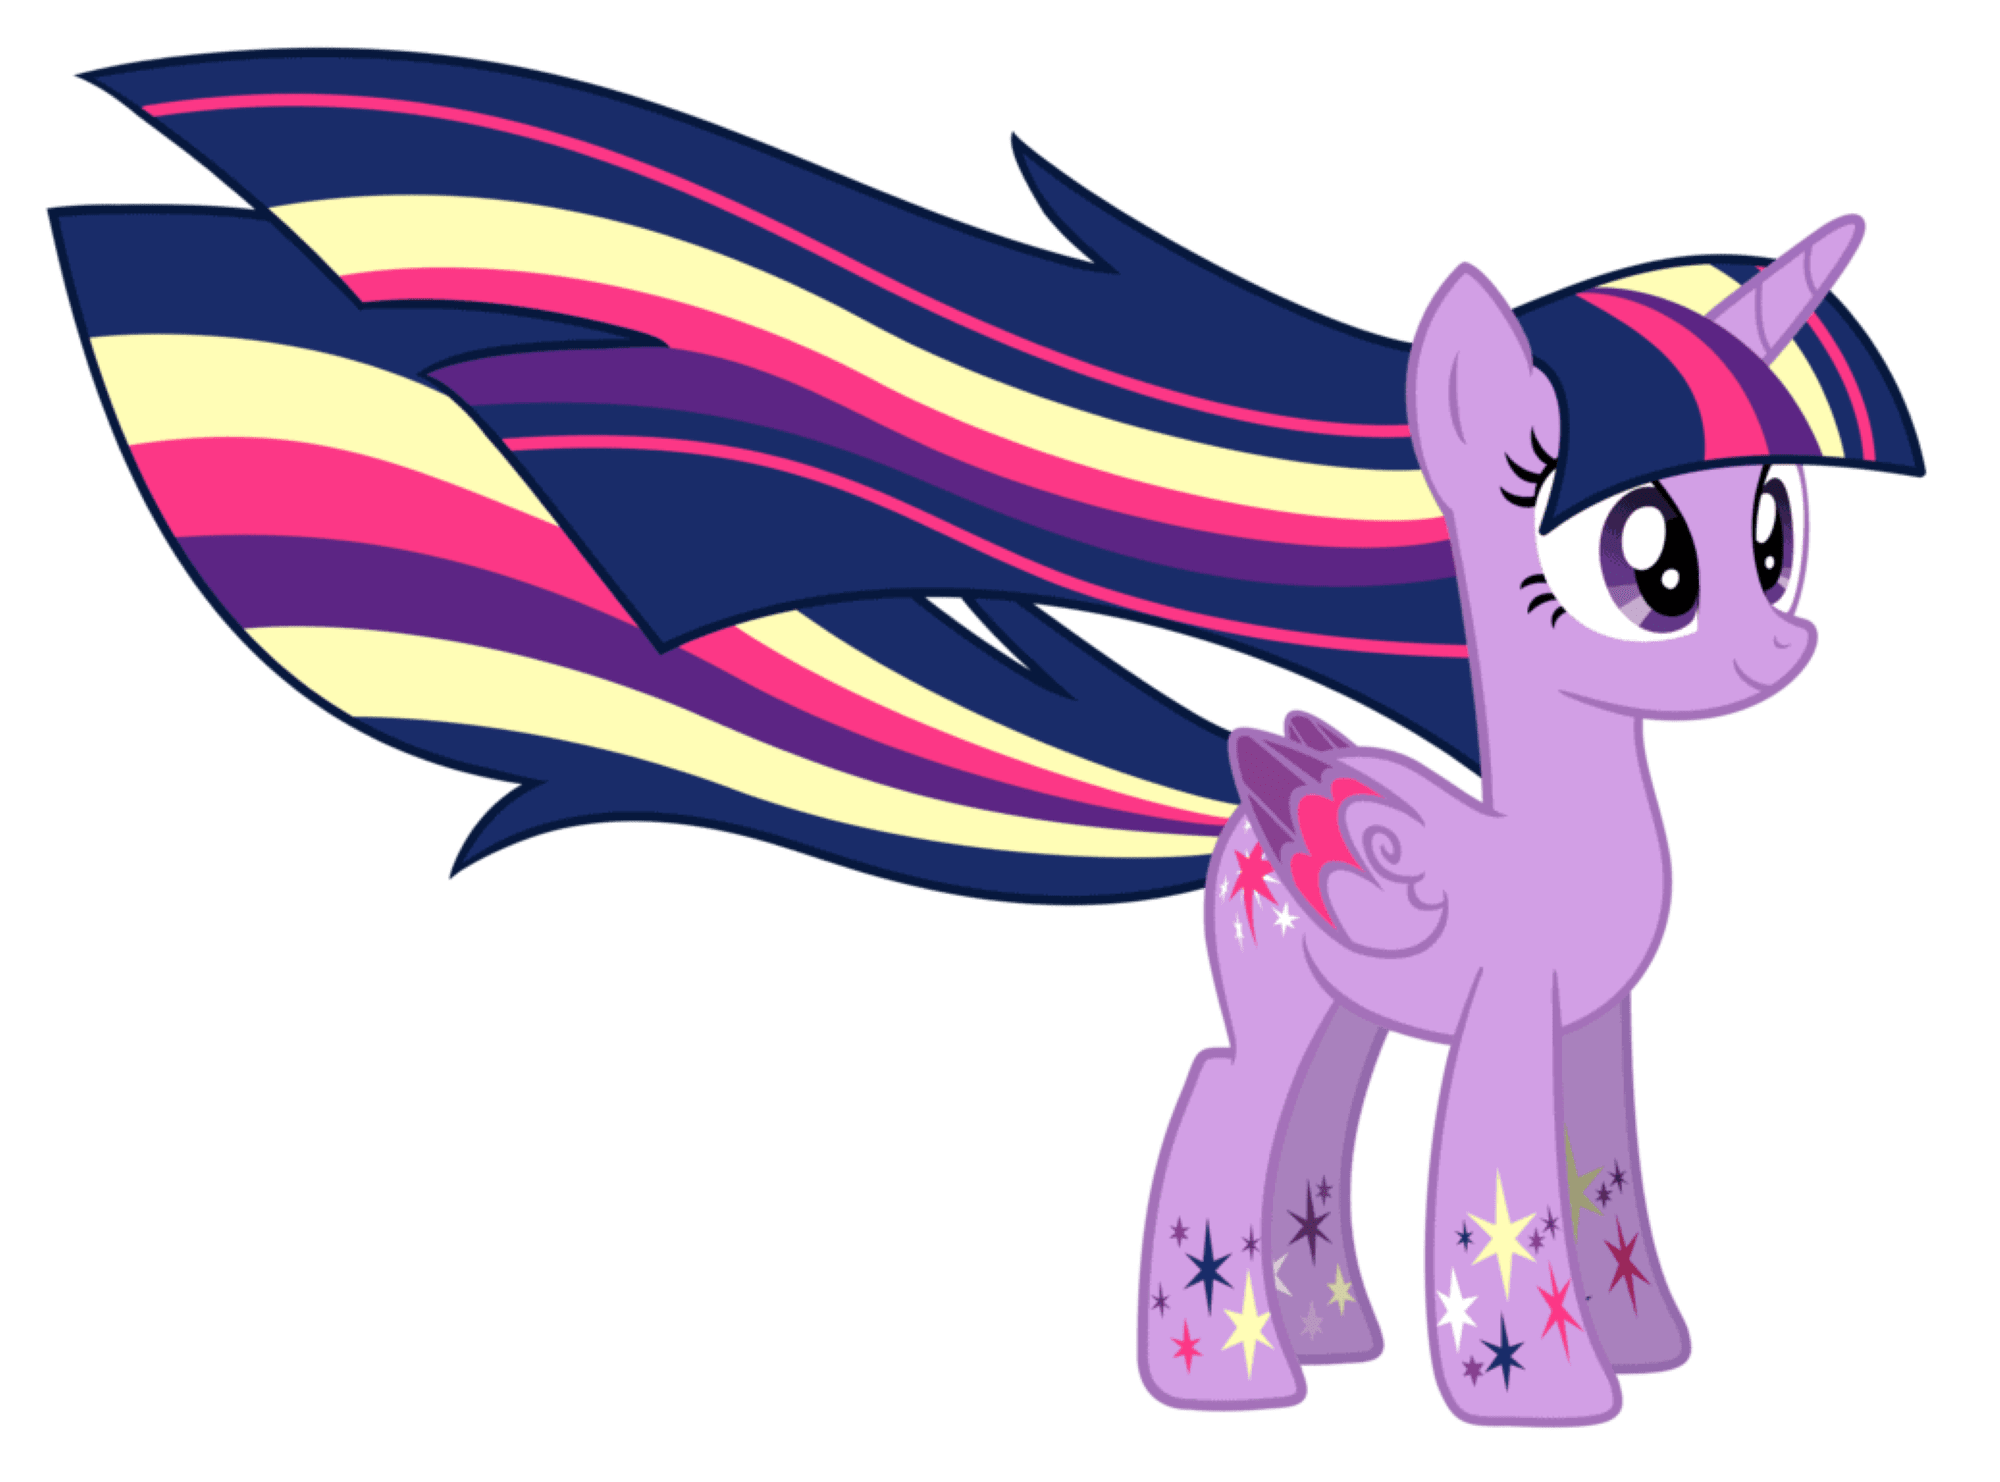 My little pony twilight. Сумеречная Искорка/Твайлайт Спаркл. Сумеречная Искорка / Twilight Sparkle (my little Pony). Искорка Твайлайф спарка. Твайлайт Спаркл Rainbow Power.